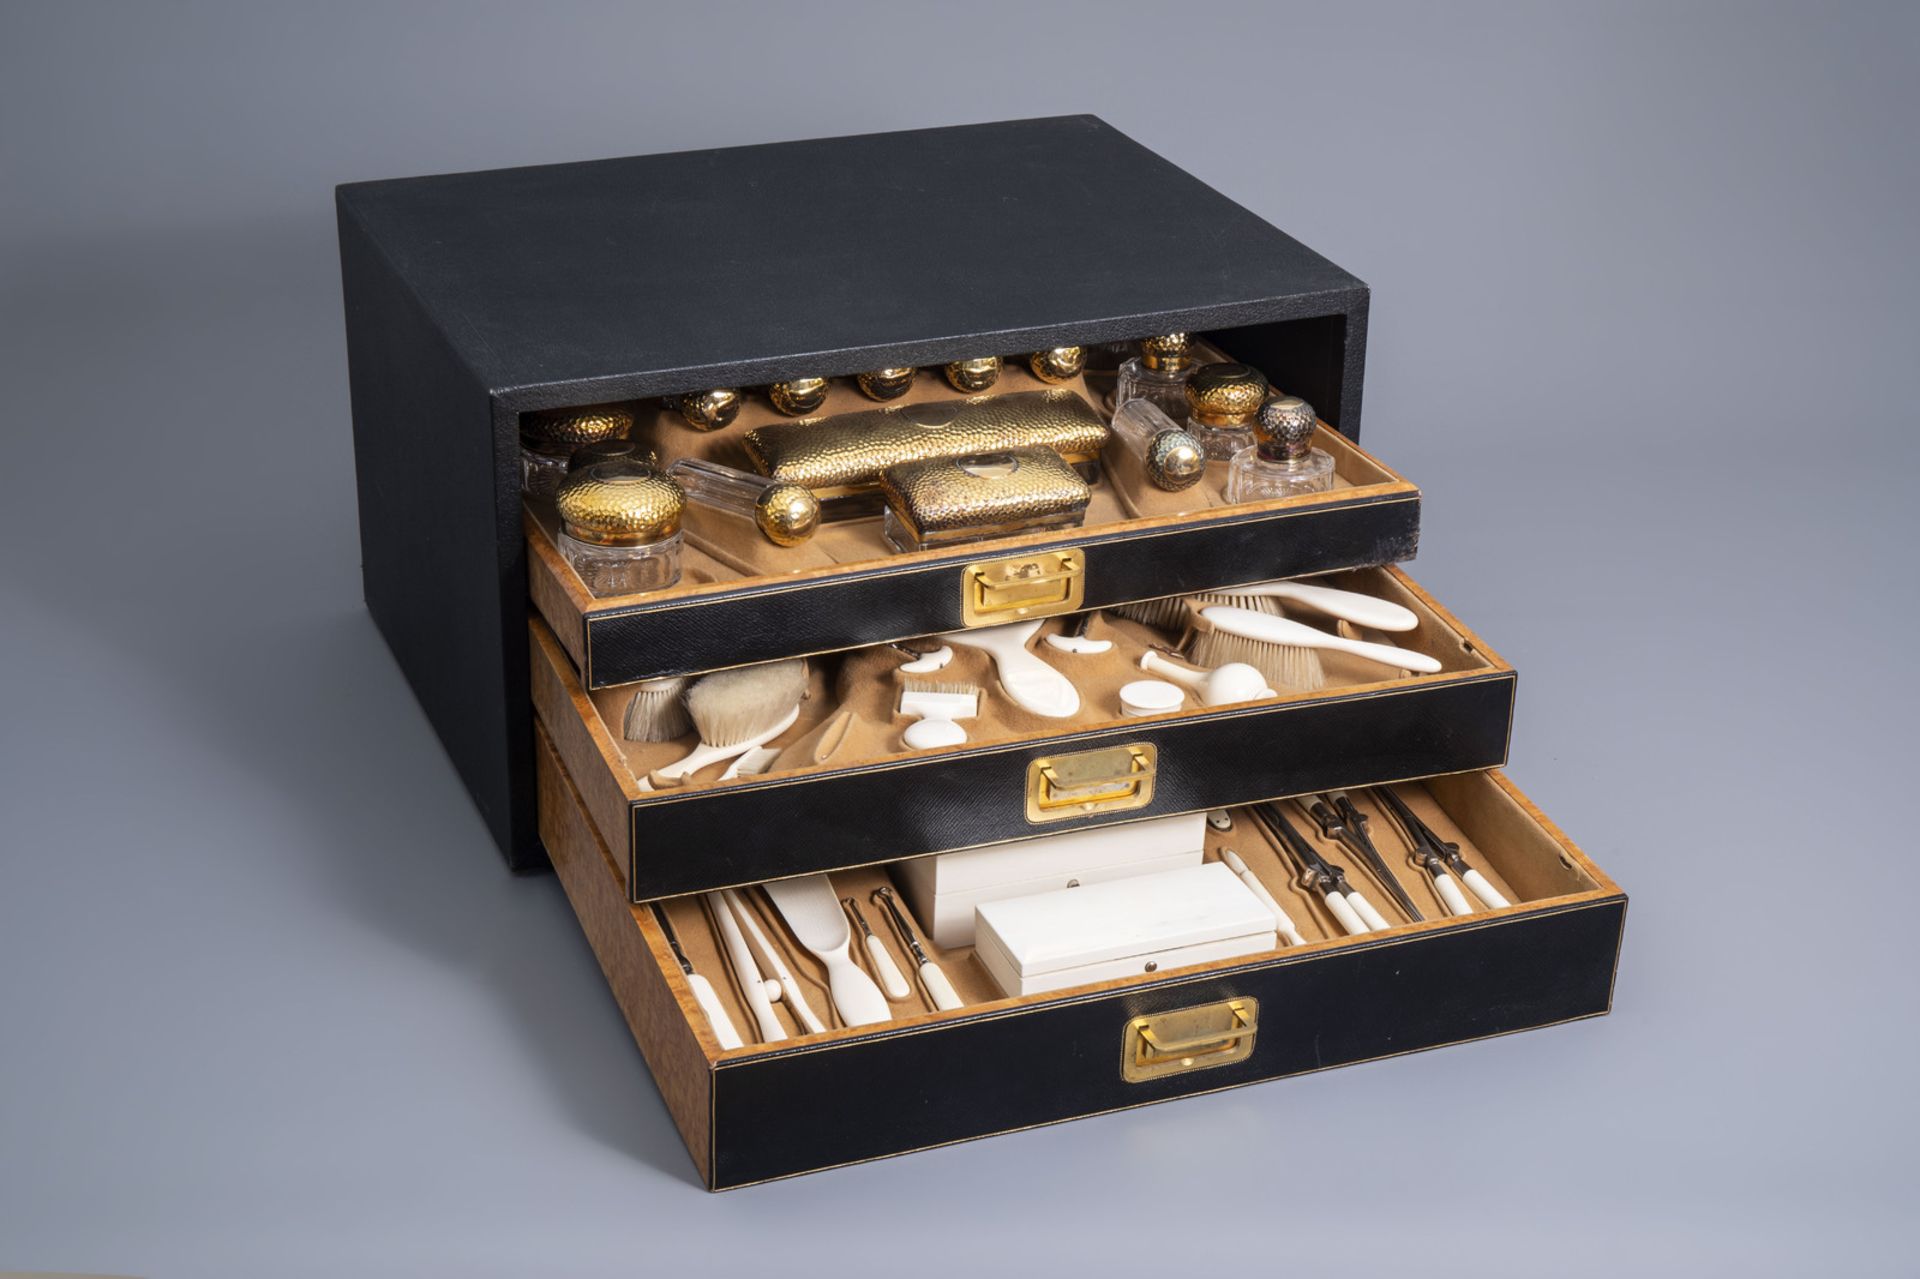 A comprehensive Victorian dressing case or dressing box, maker's mark Thomas Wimbush, London, dated